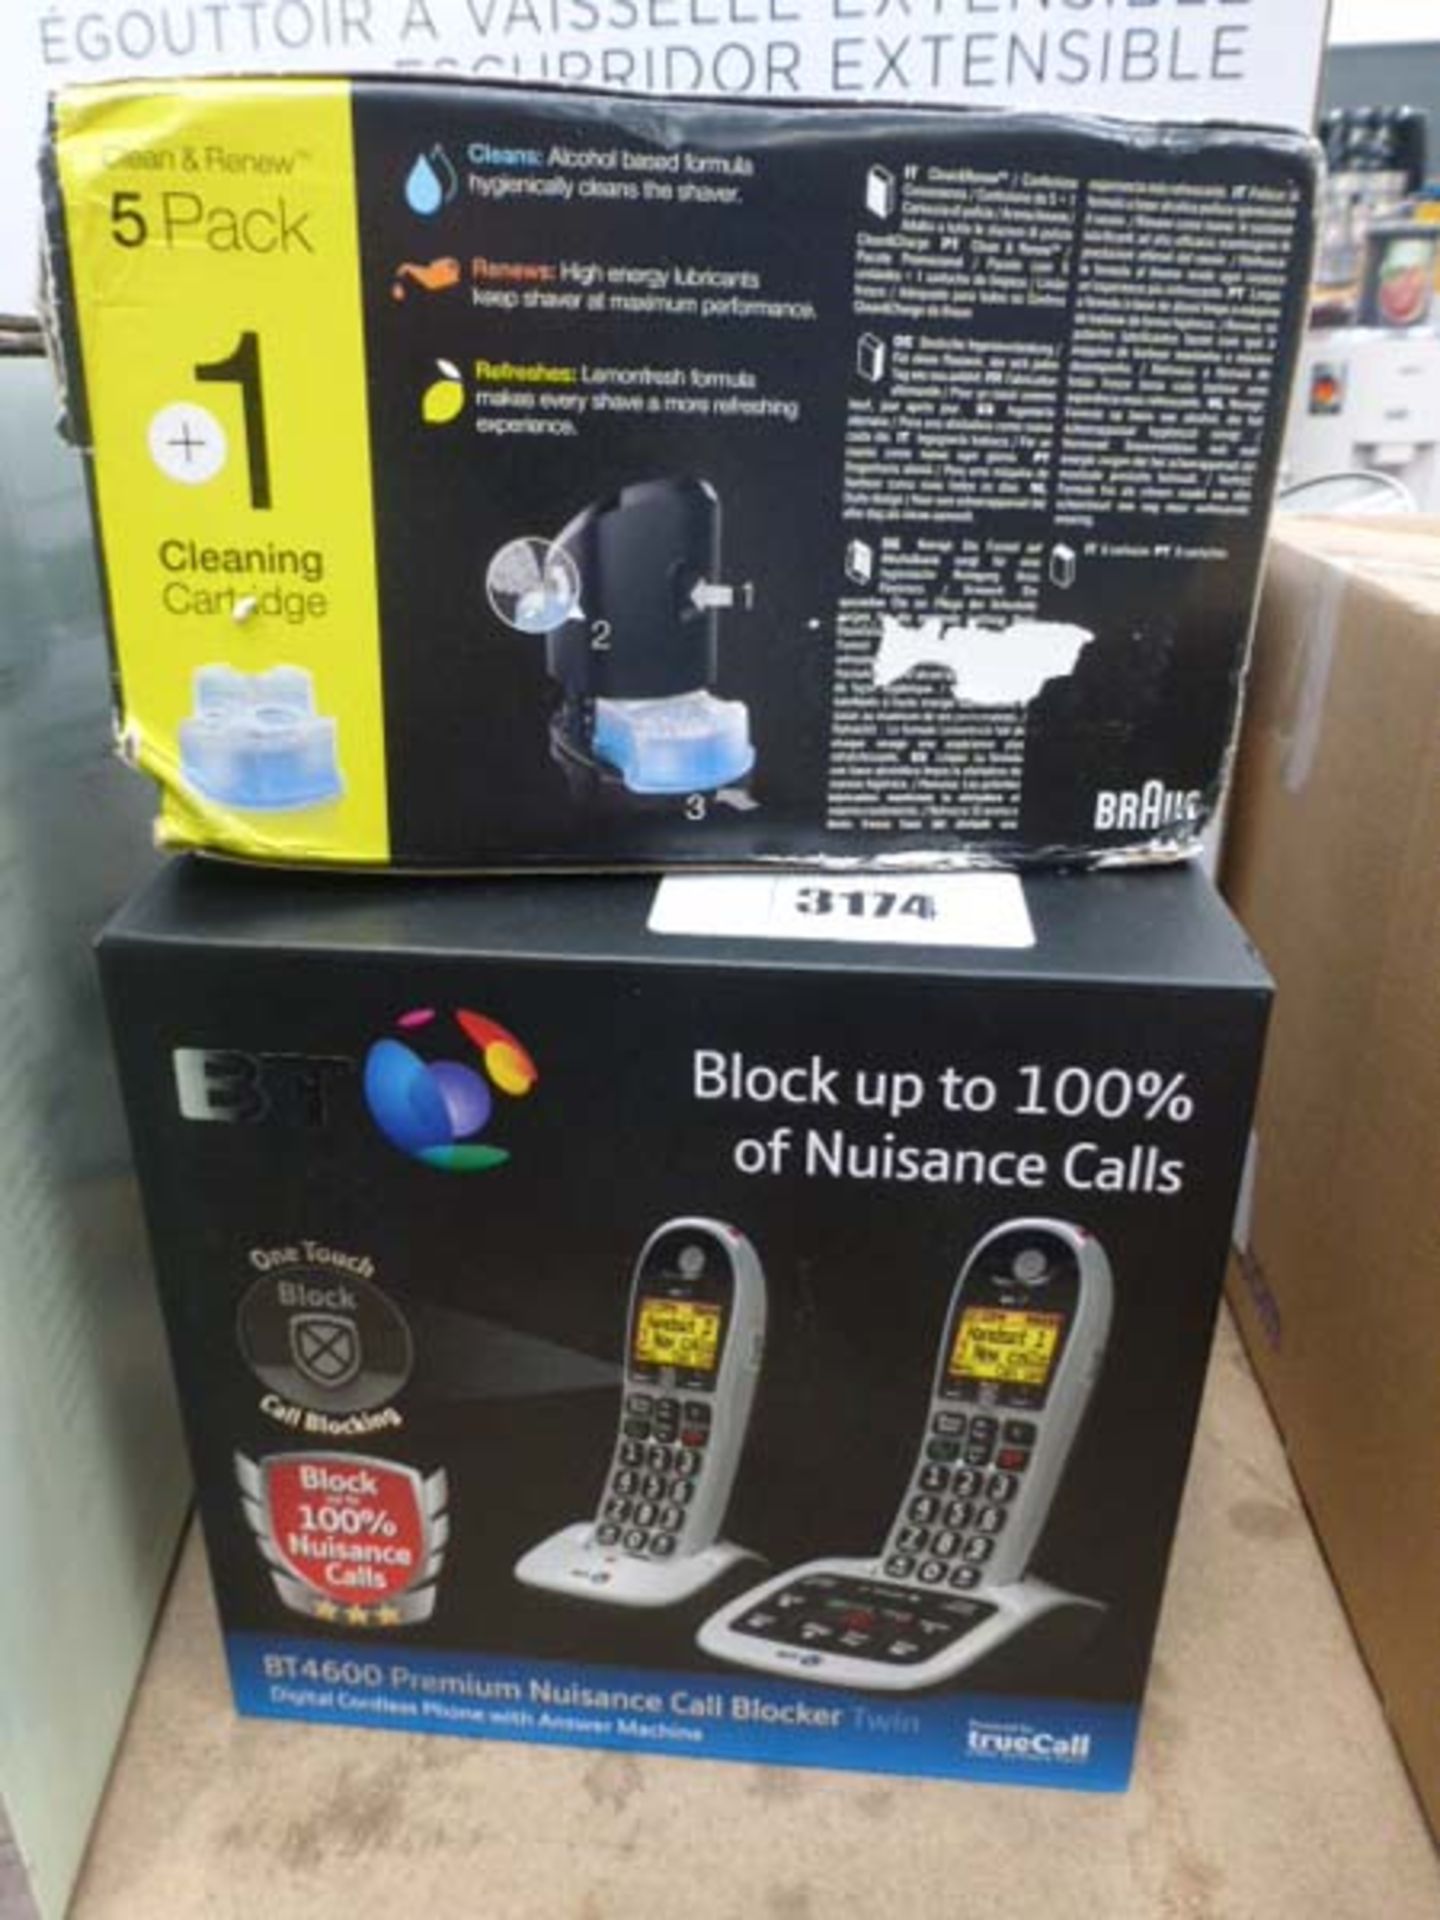 BT 4600 digital cordless phone and answering machine